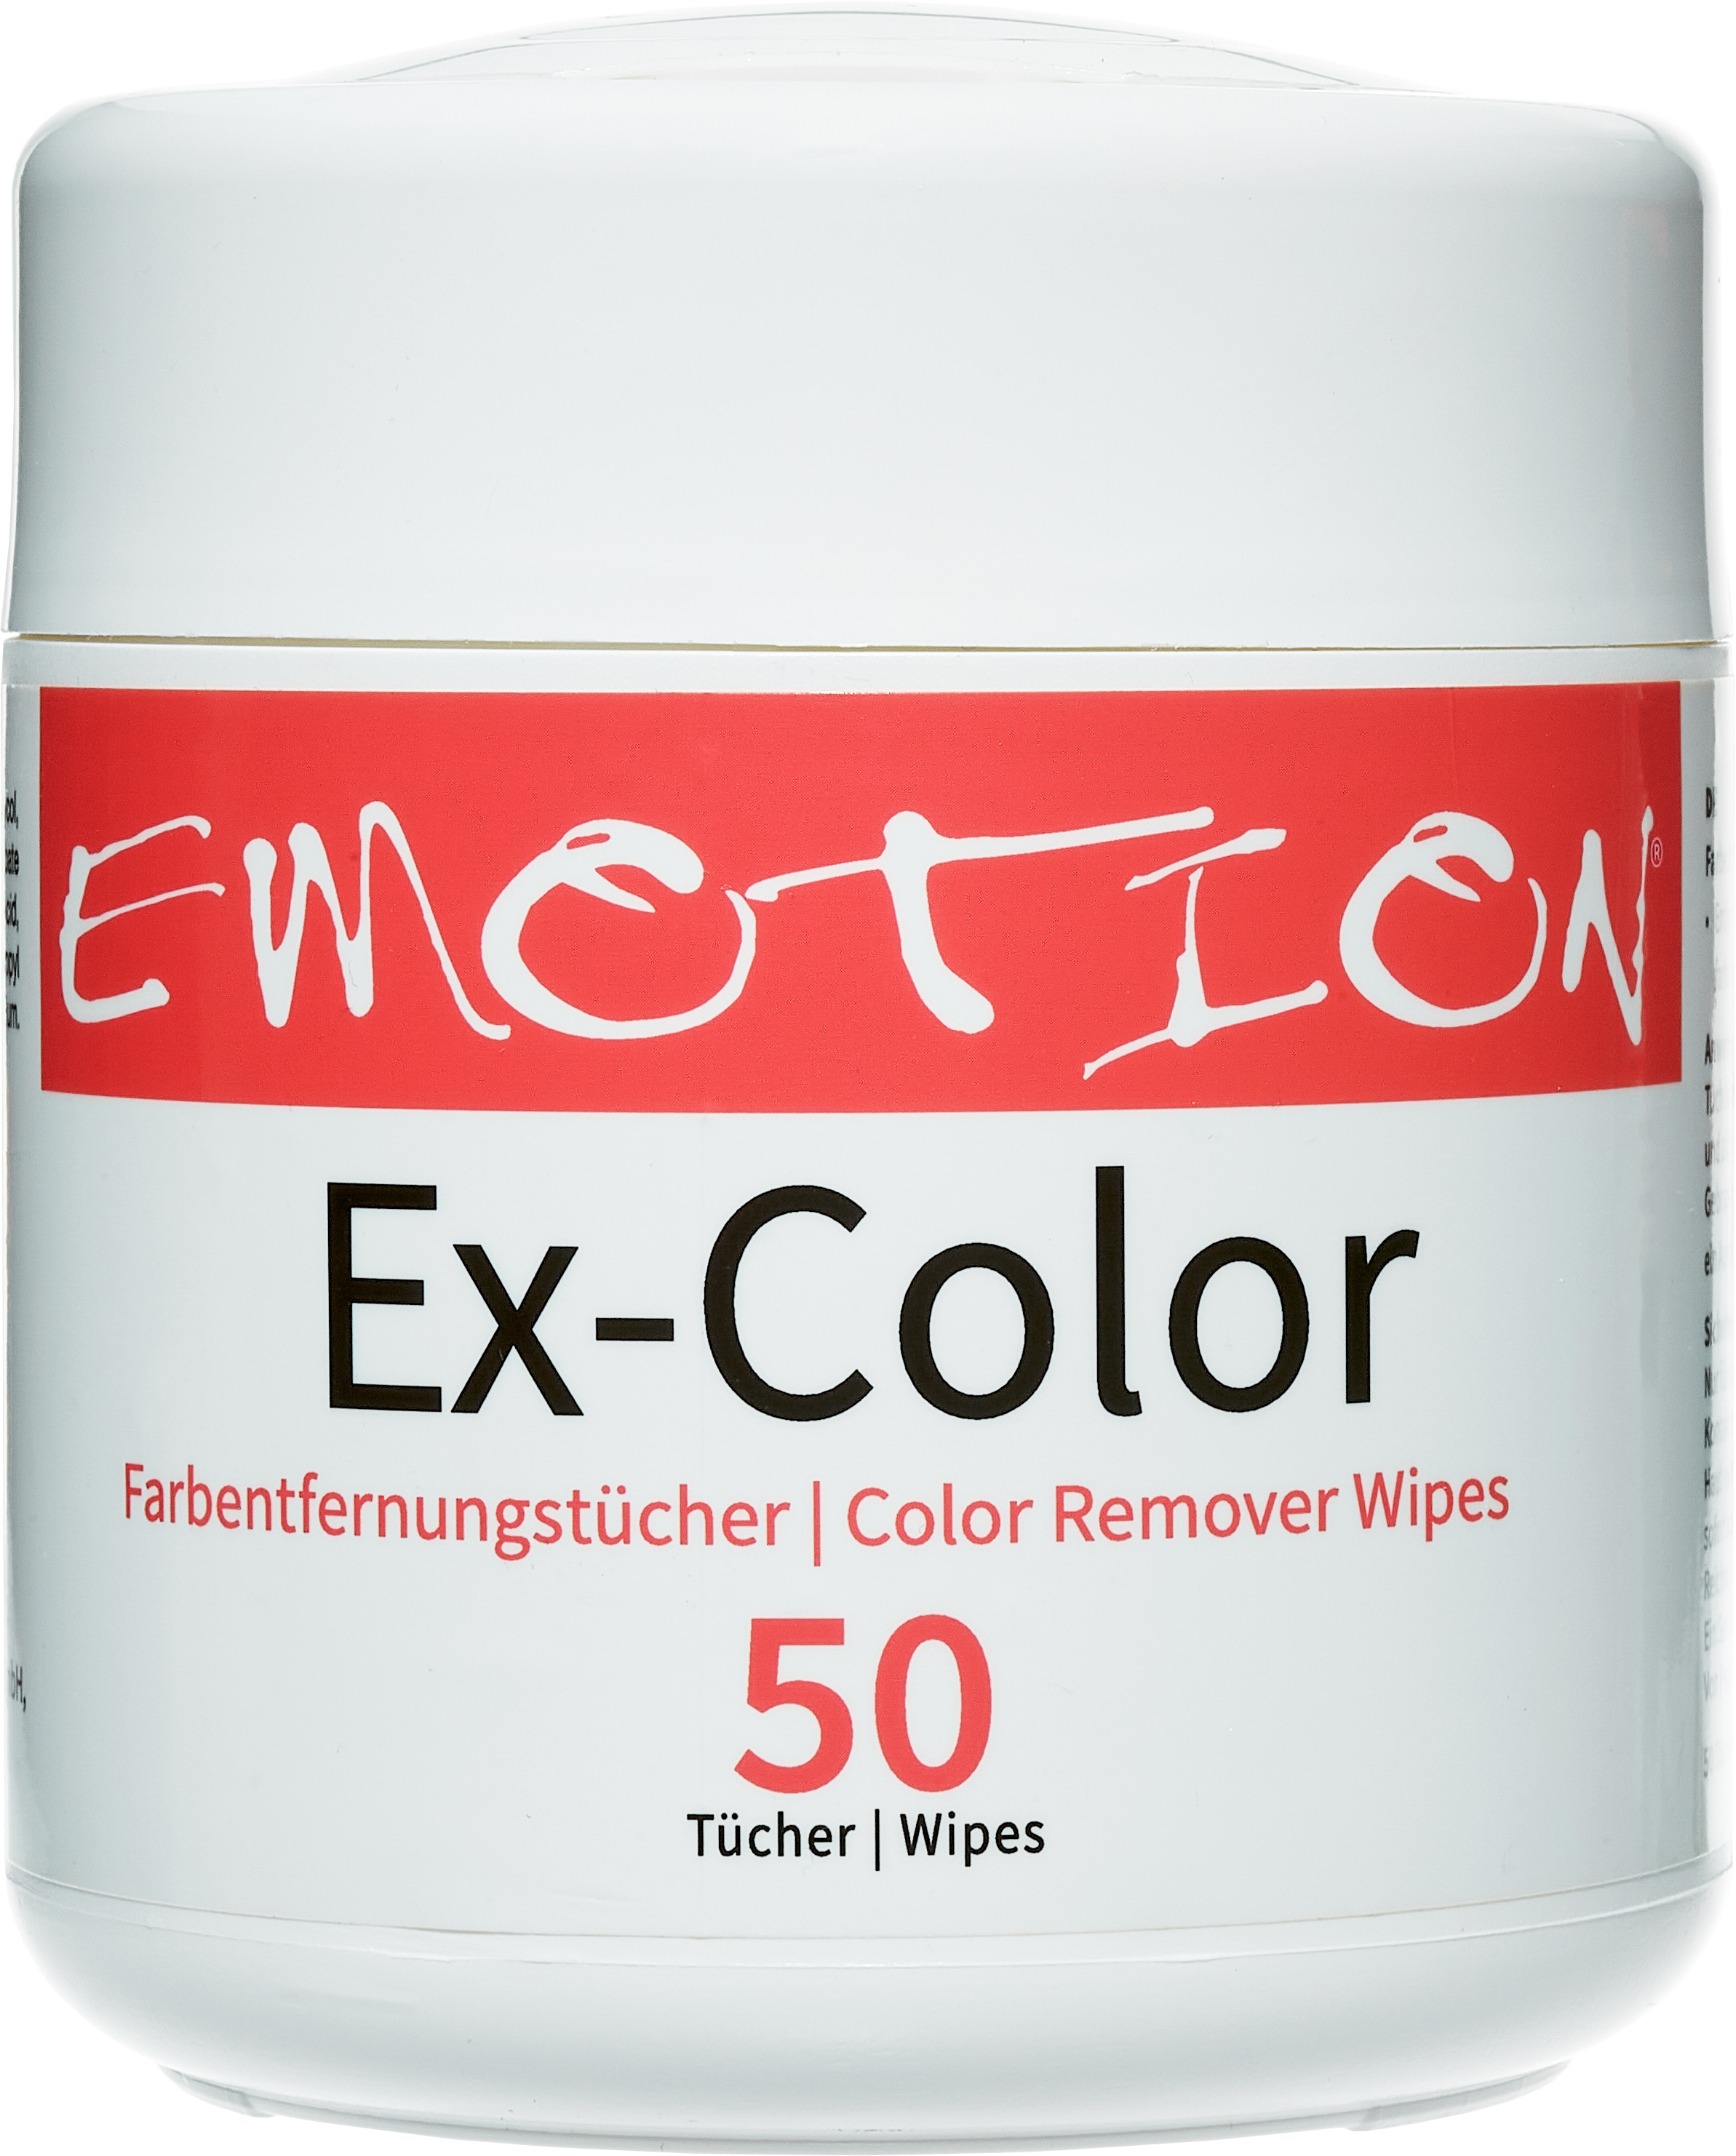 EX-COLOR Farbentfernungstücher